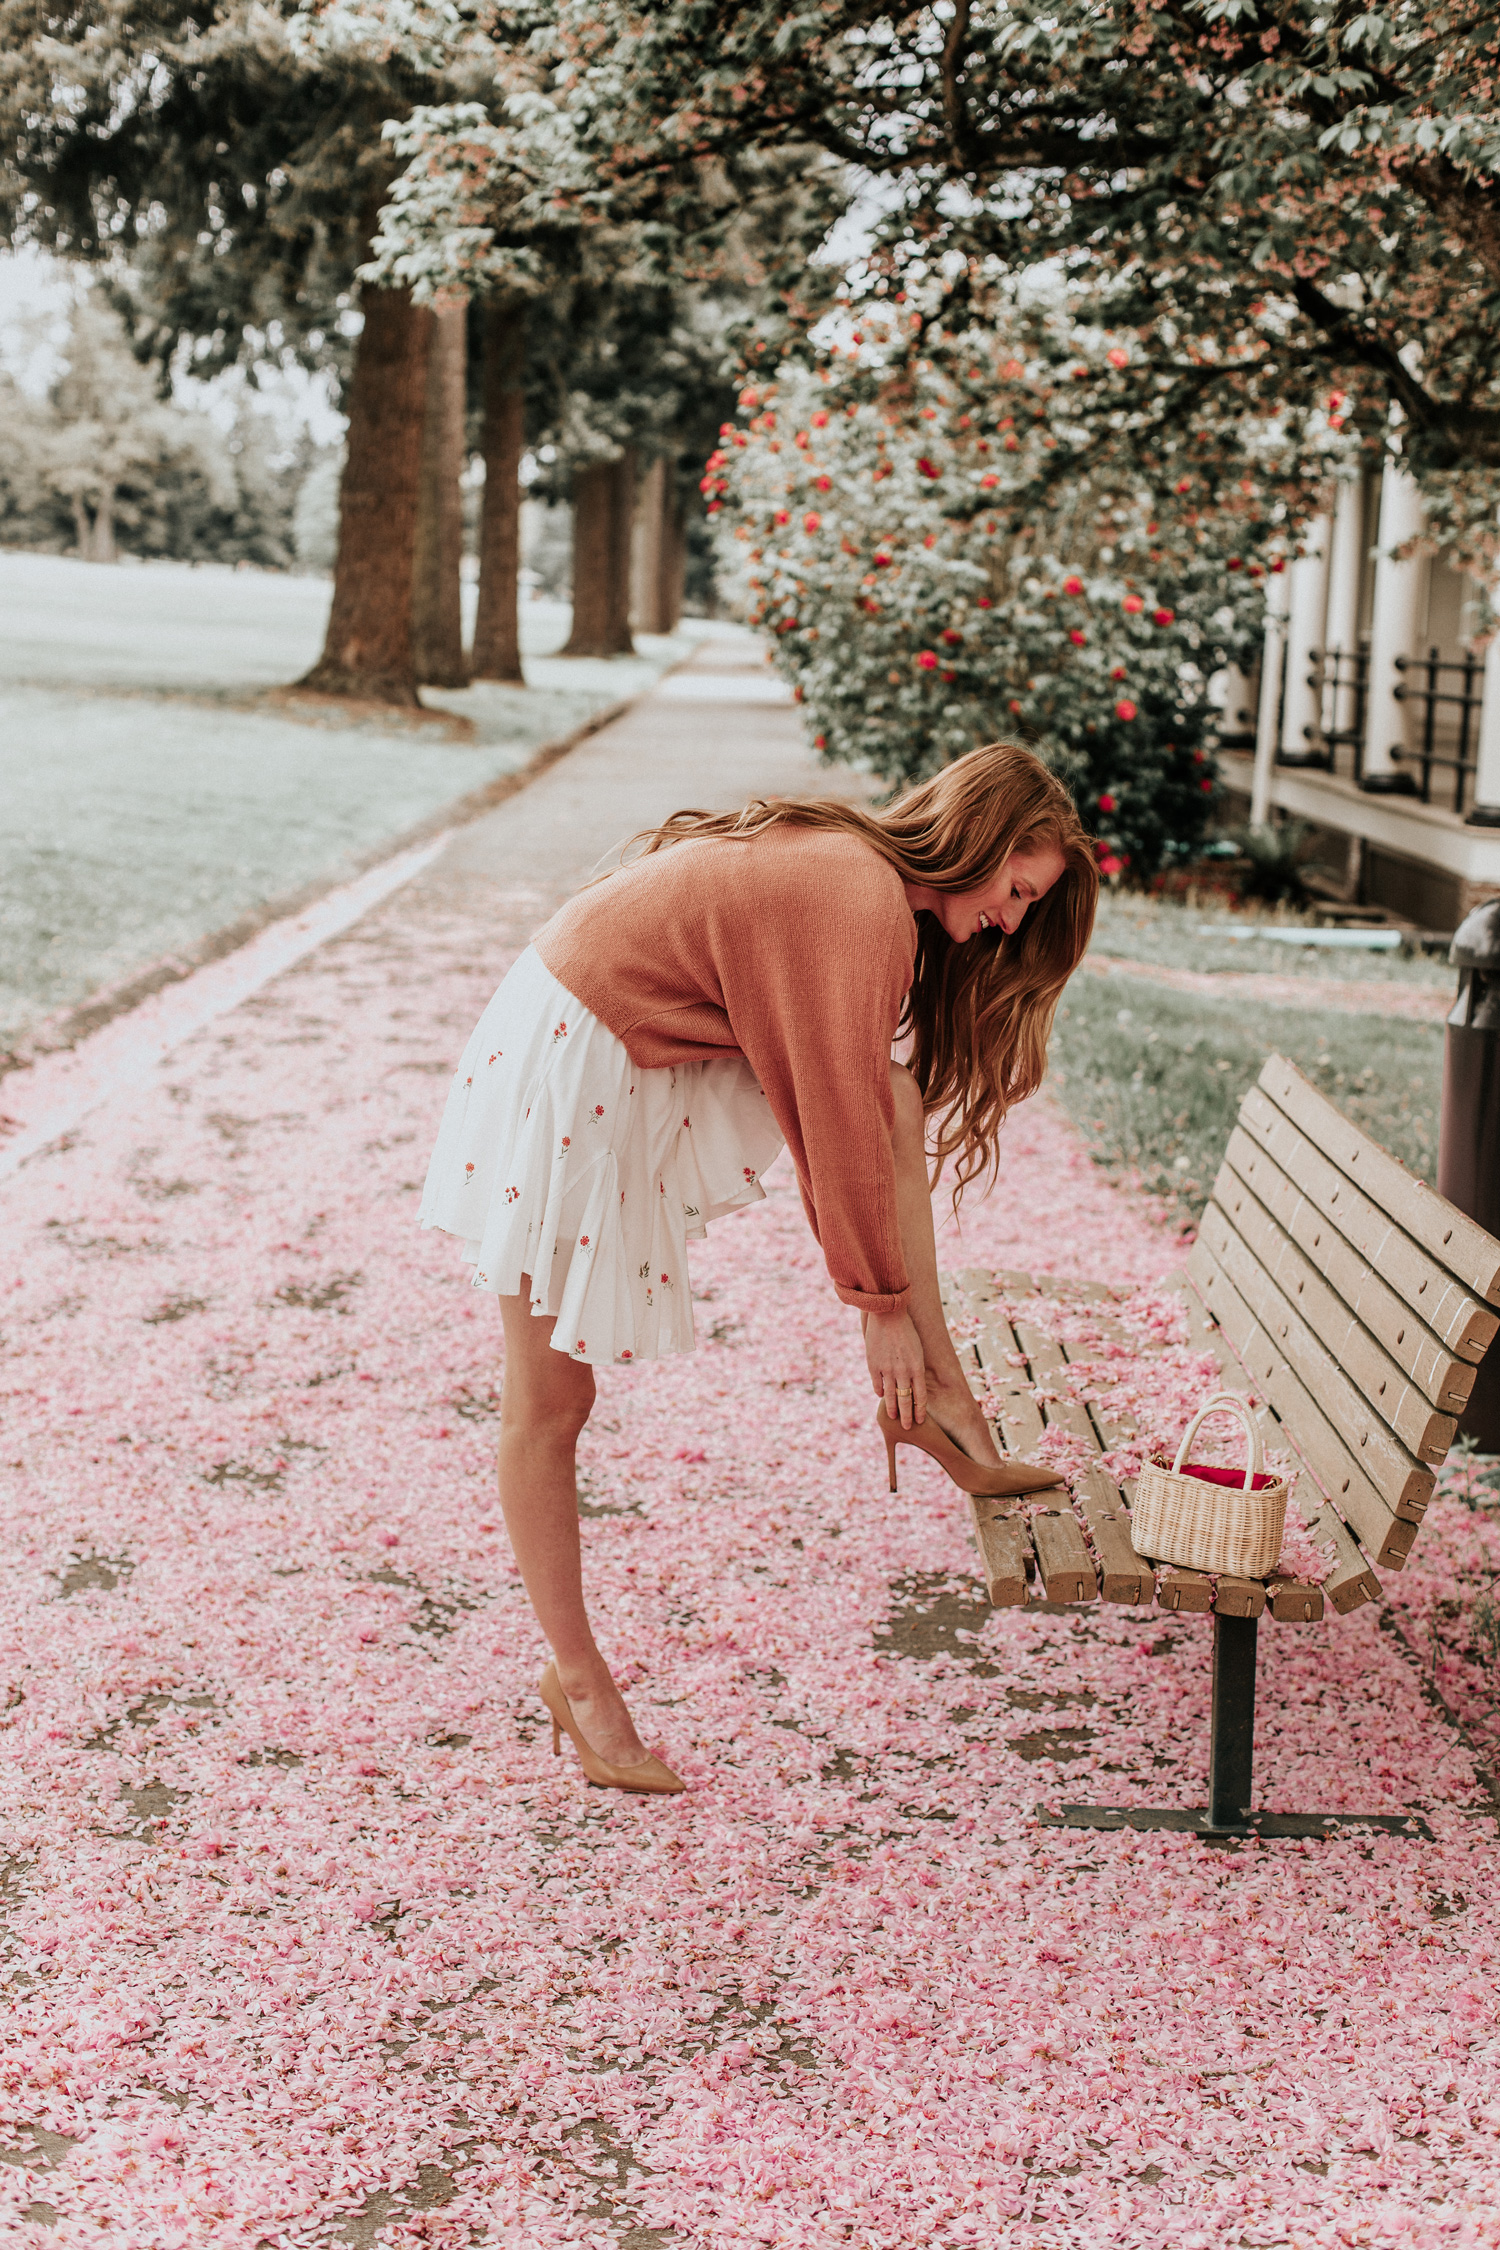 Floral Miniskirt & Cherry Blossom Petals